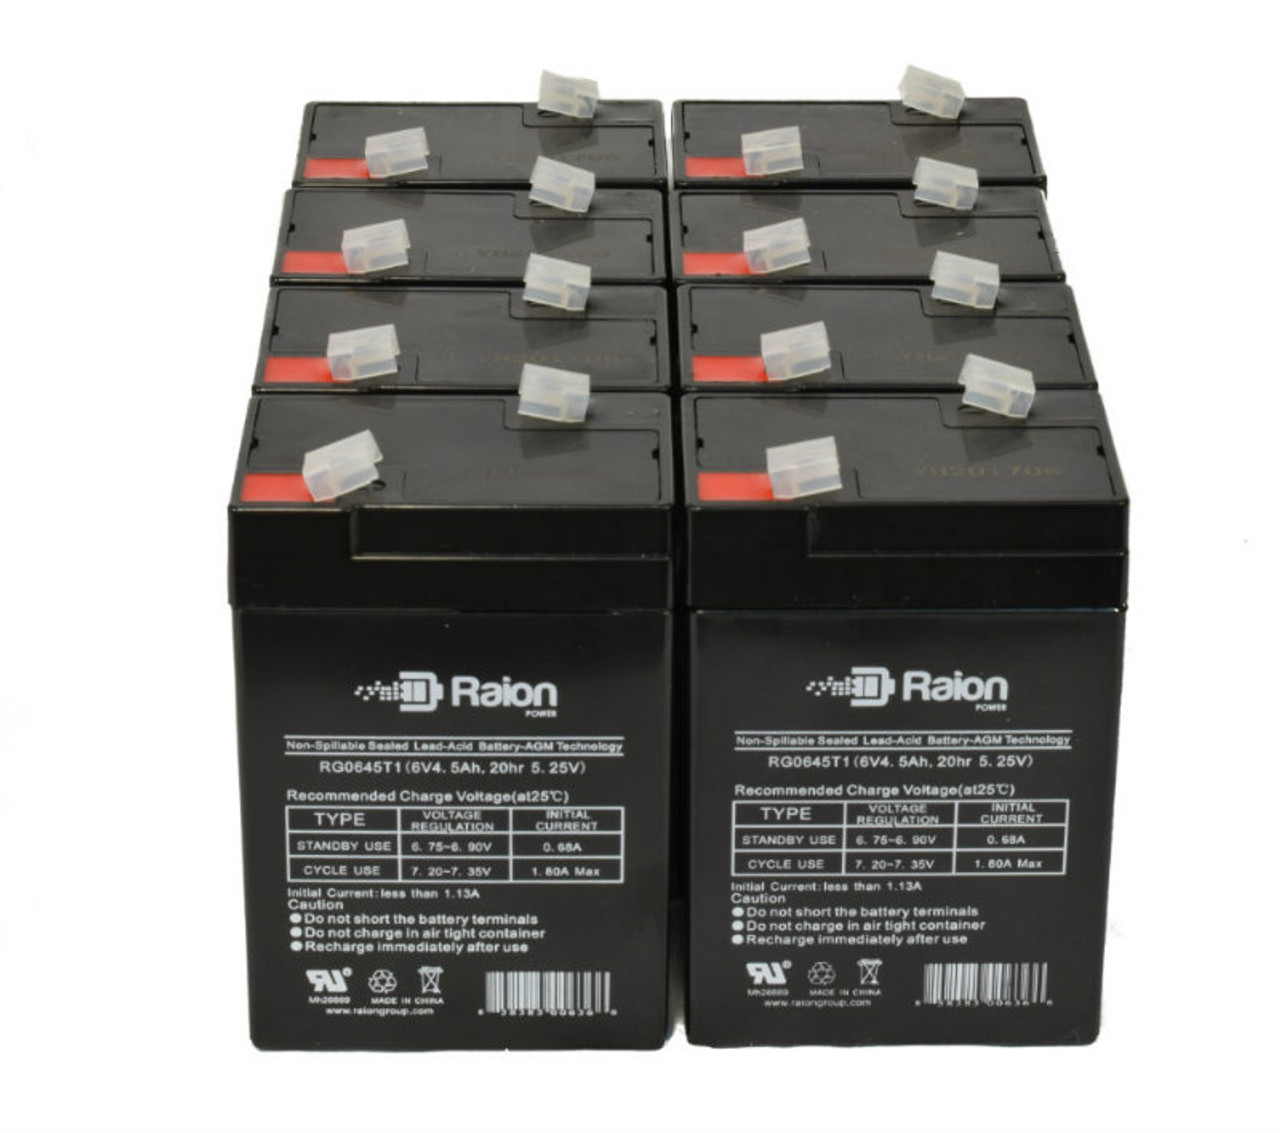 Raion Power 6V 4.5Ah Replacement Emergency Light Battery for Douglas Guardian DG64 - 8 Pack